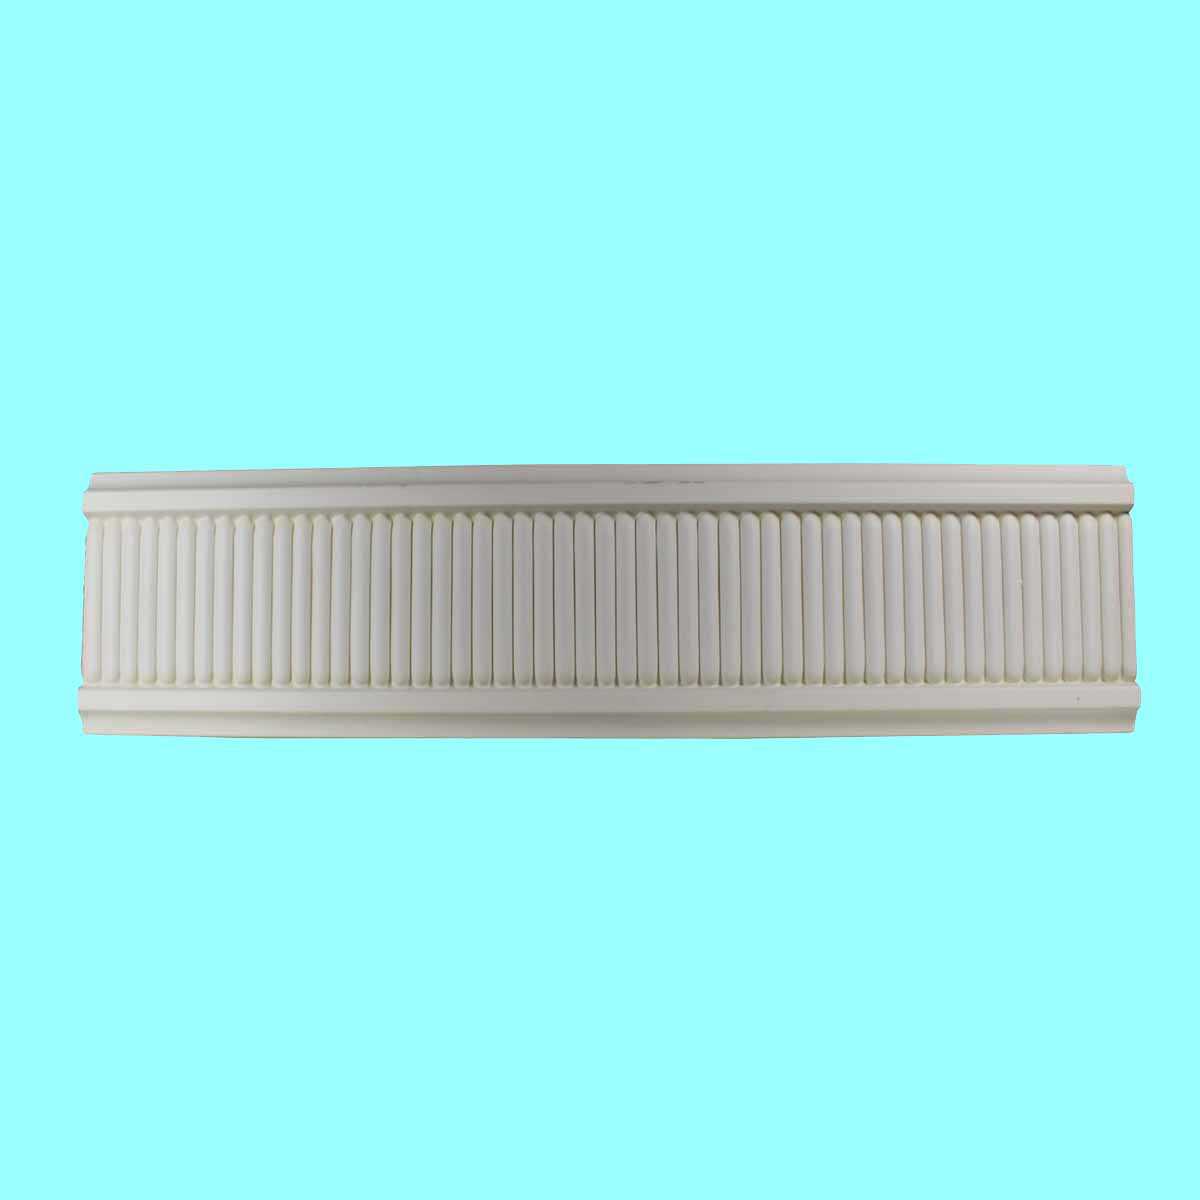 Cornice White Urethane Sample of 11598 24' Long | Renovator's Supply